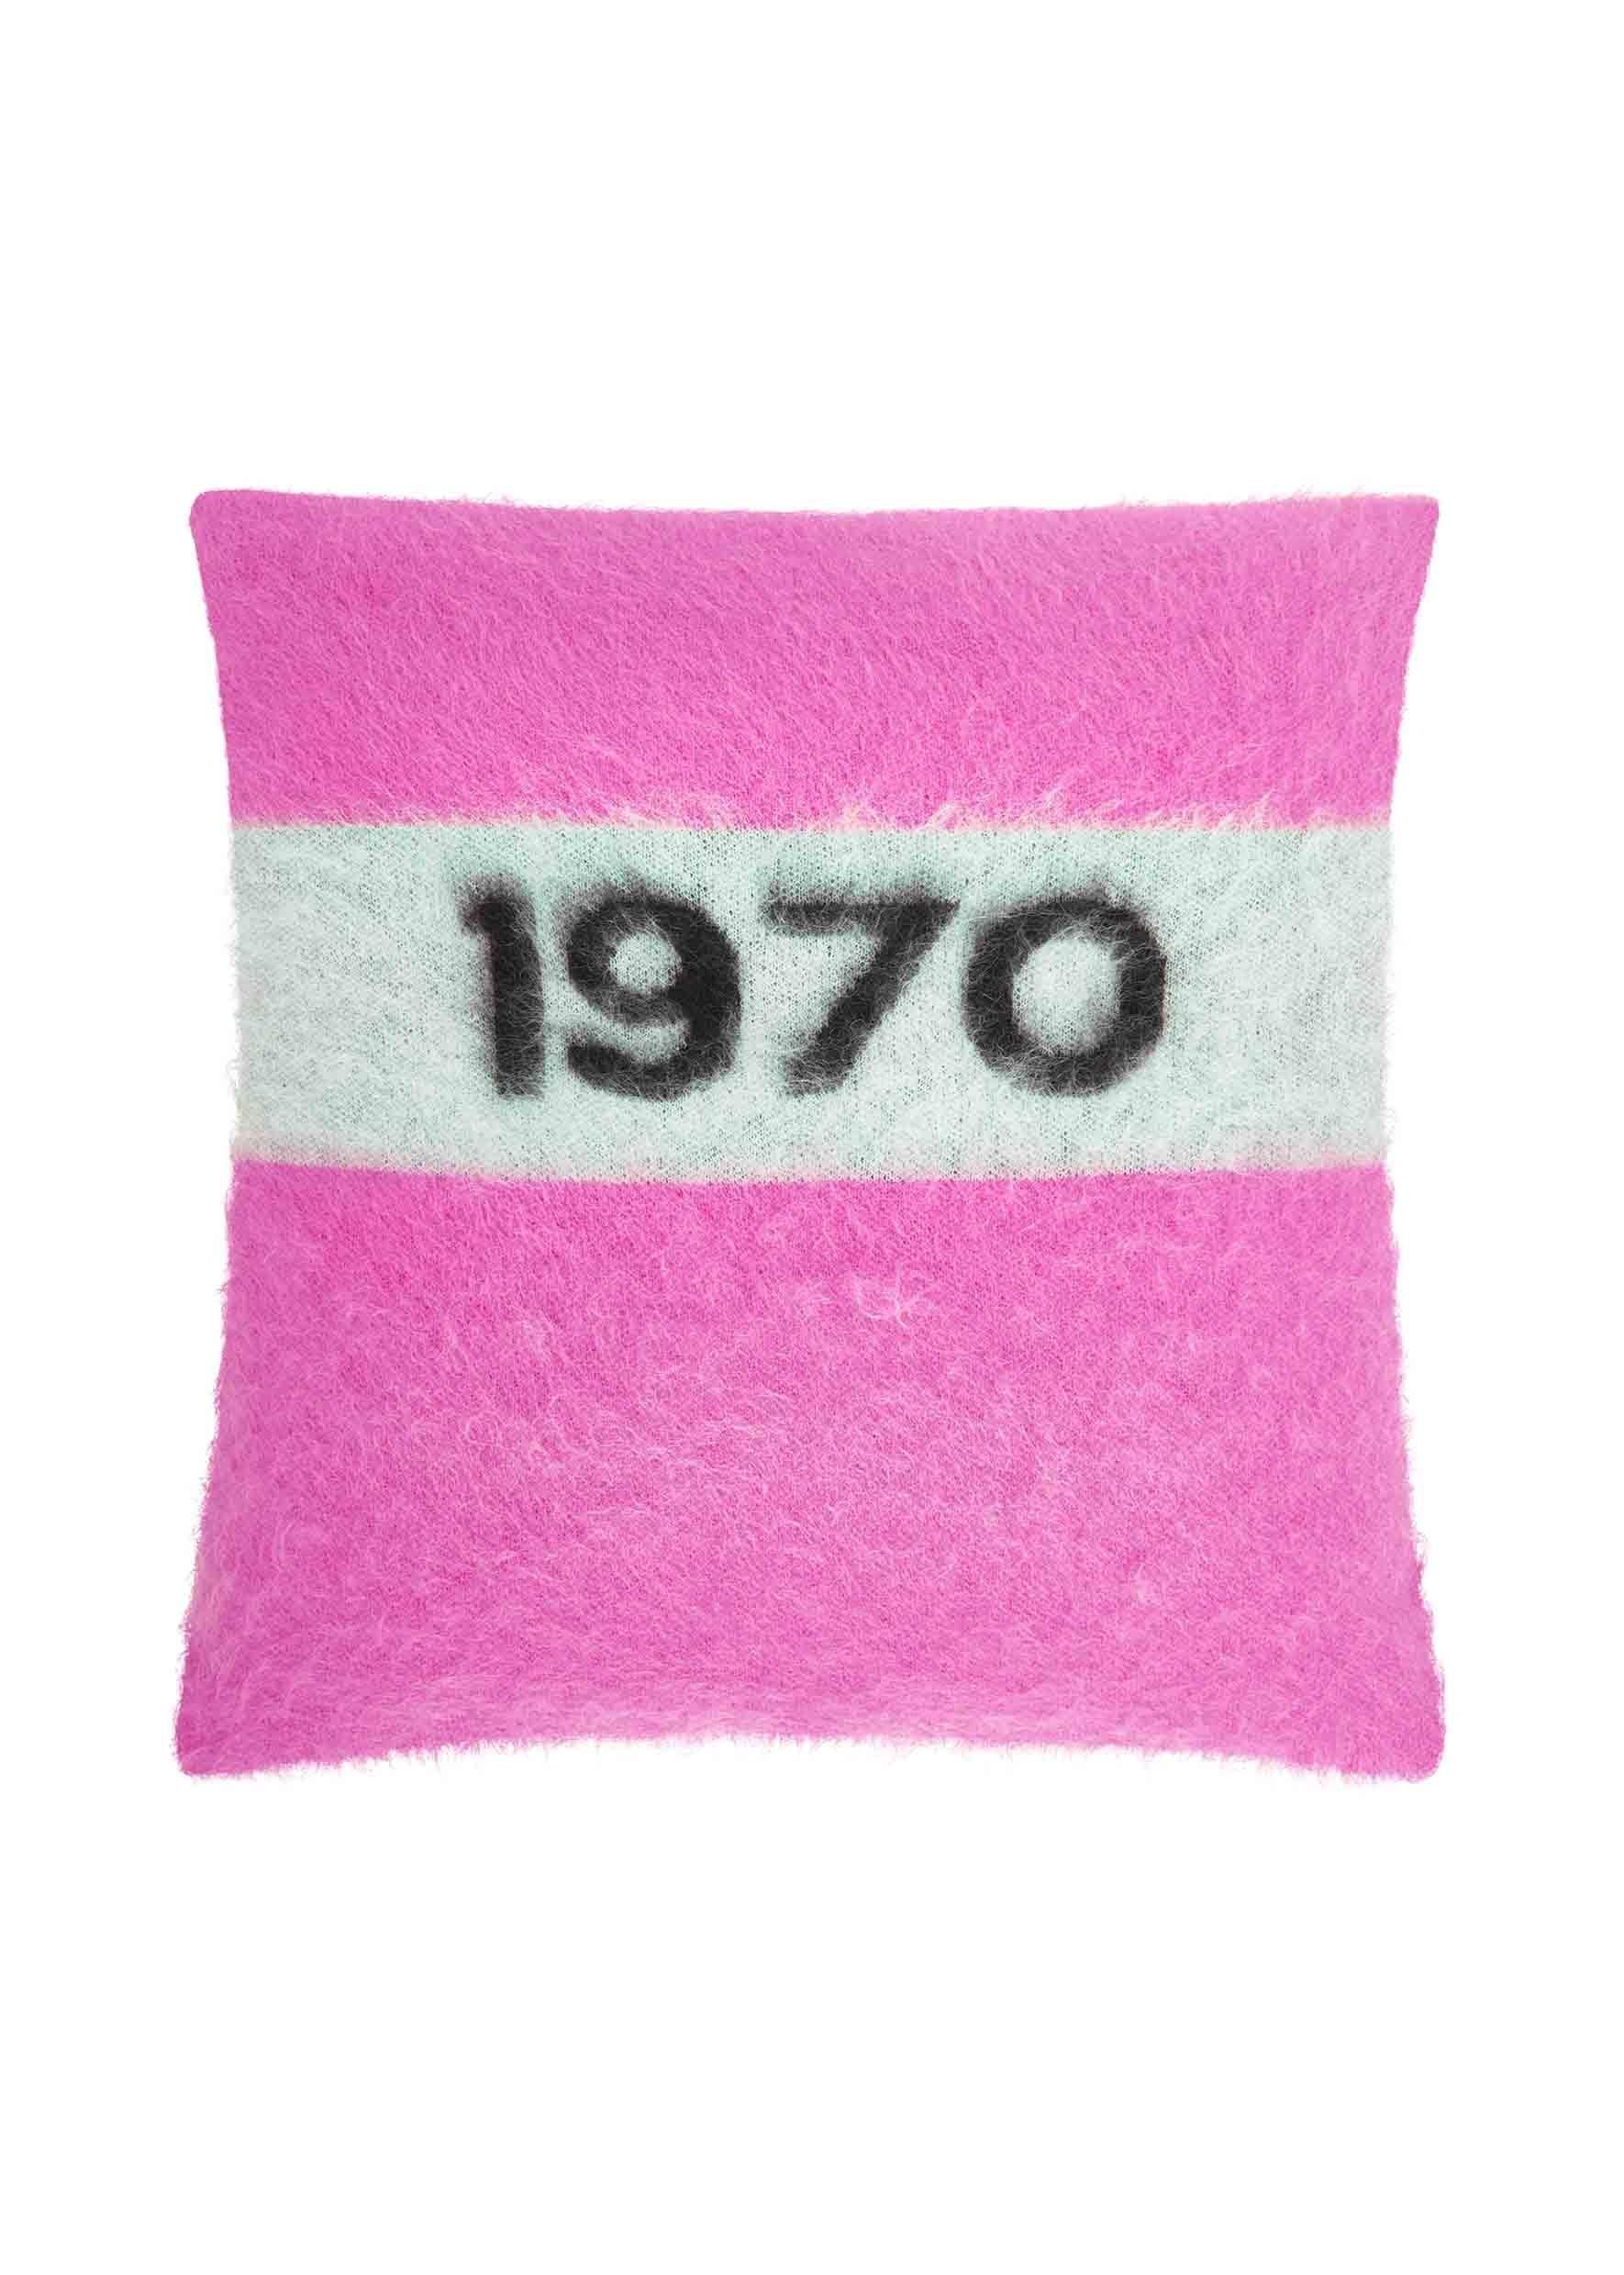 Bella Freud - 1970 Flamingo Pink Mohair Cushion - 32 The Guild 